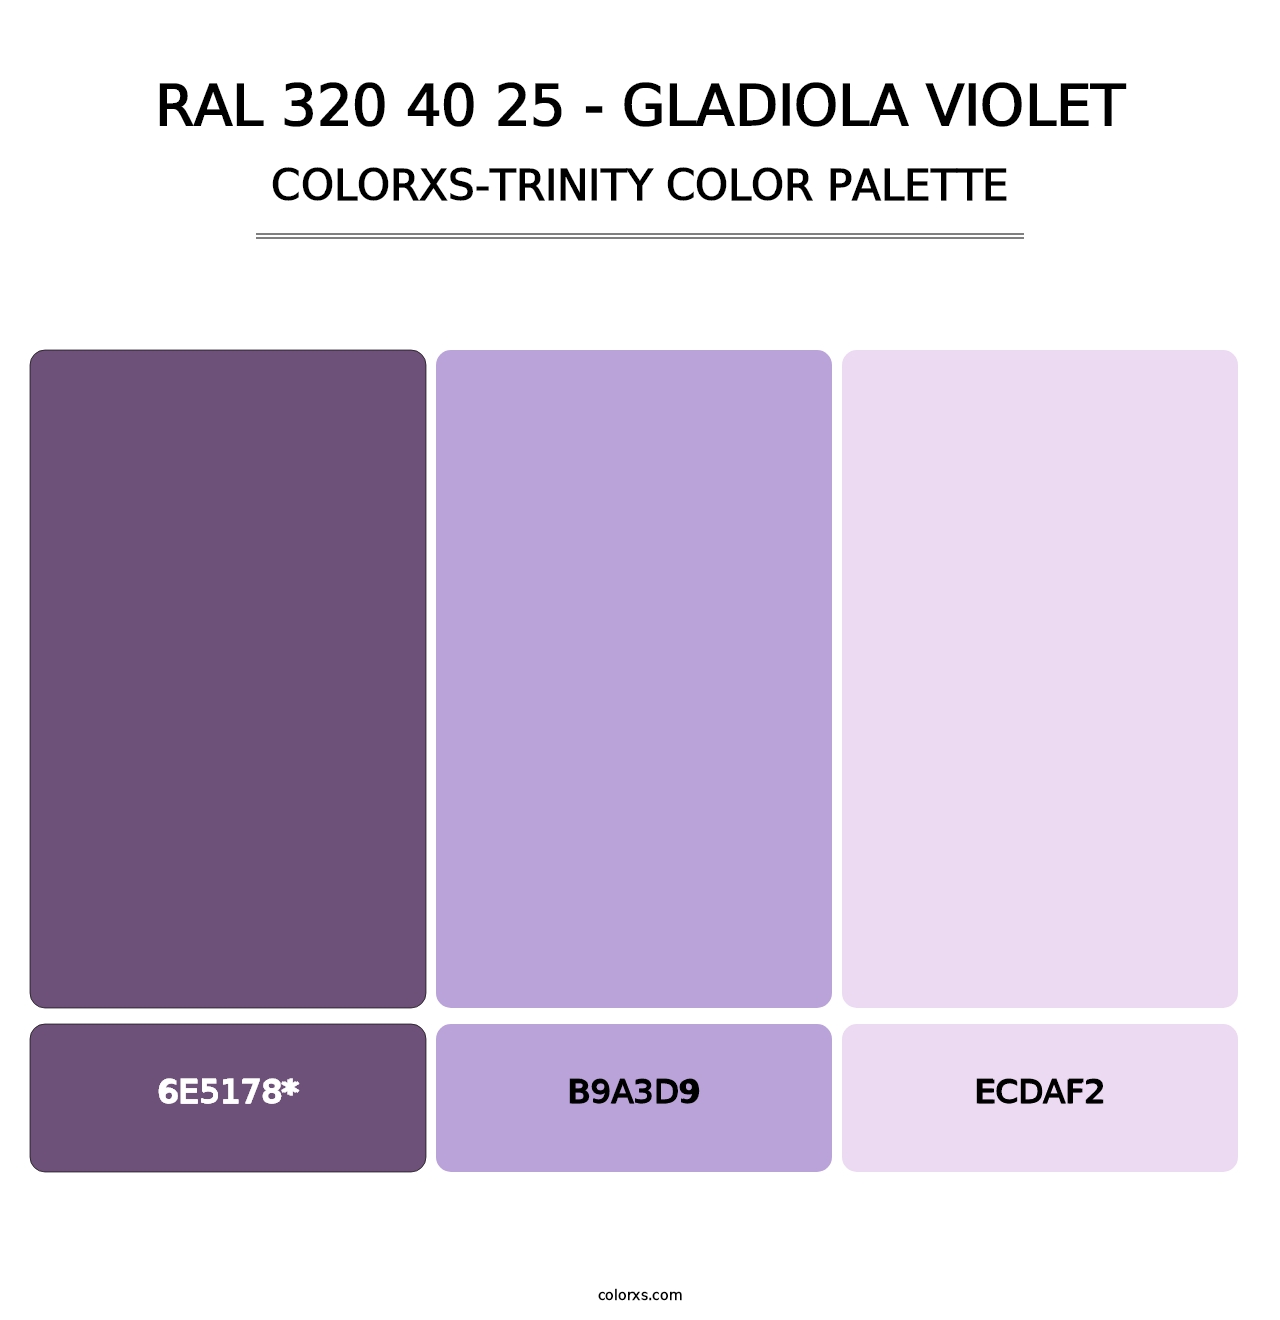 RAL 320 40 25 - Gladiola Violet - Colorxs Trinity Palette